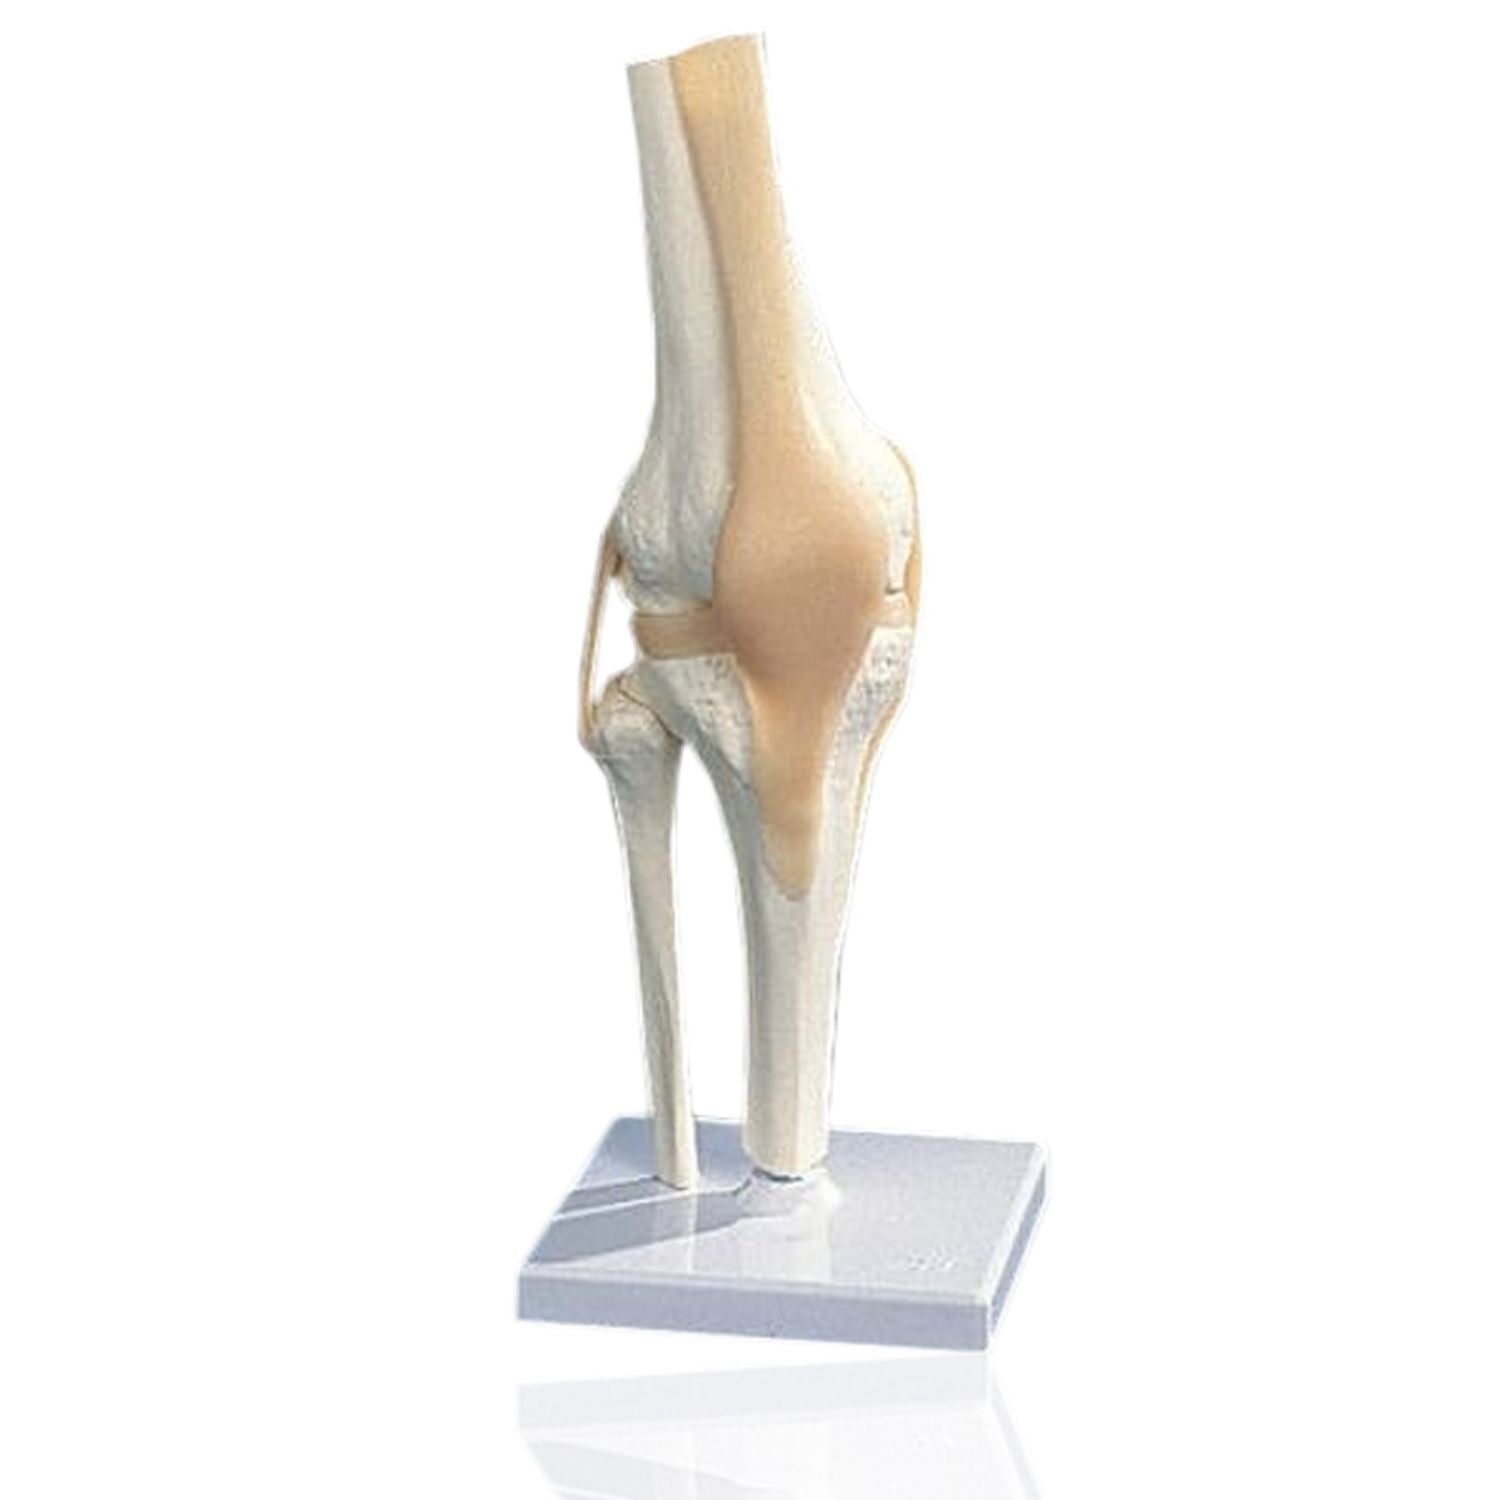 Knee Joint - Flexible